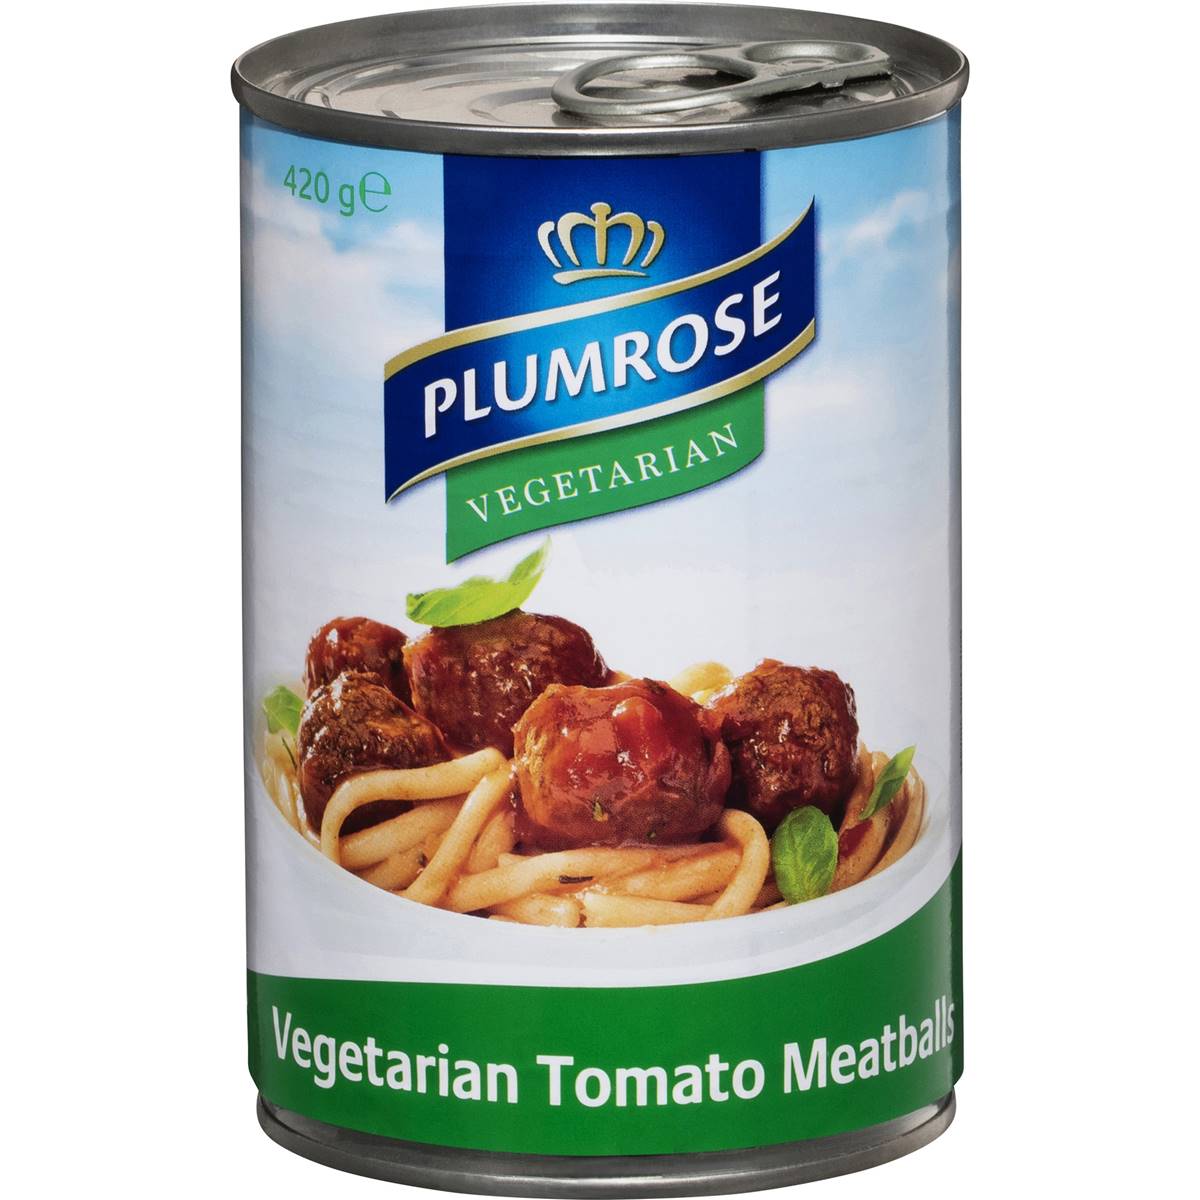 Plumrose Vegetarian Tomato Meatballs 420g